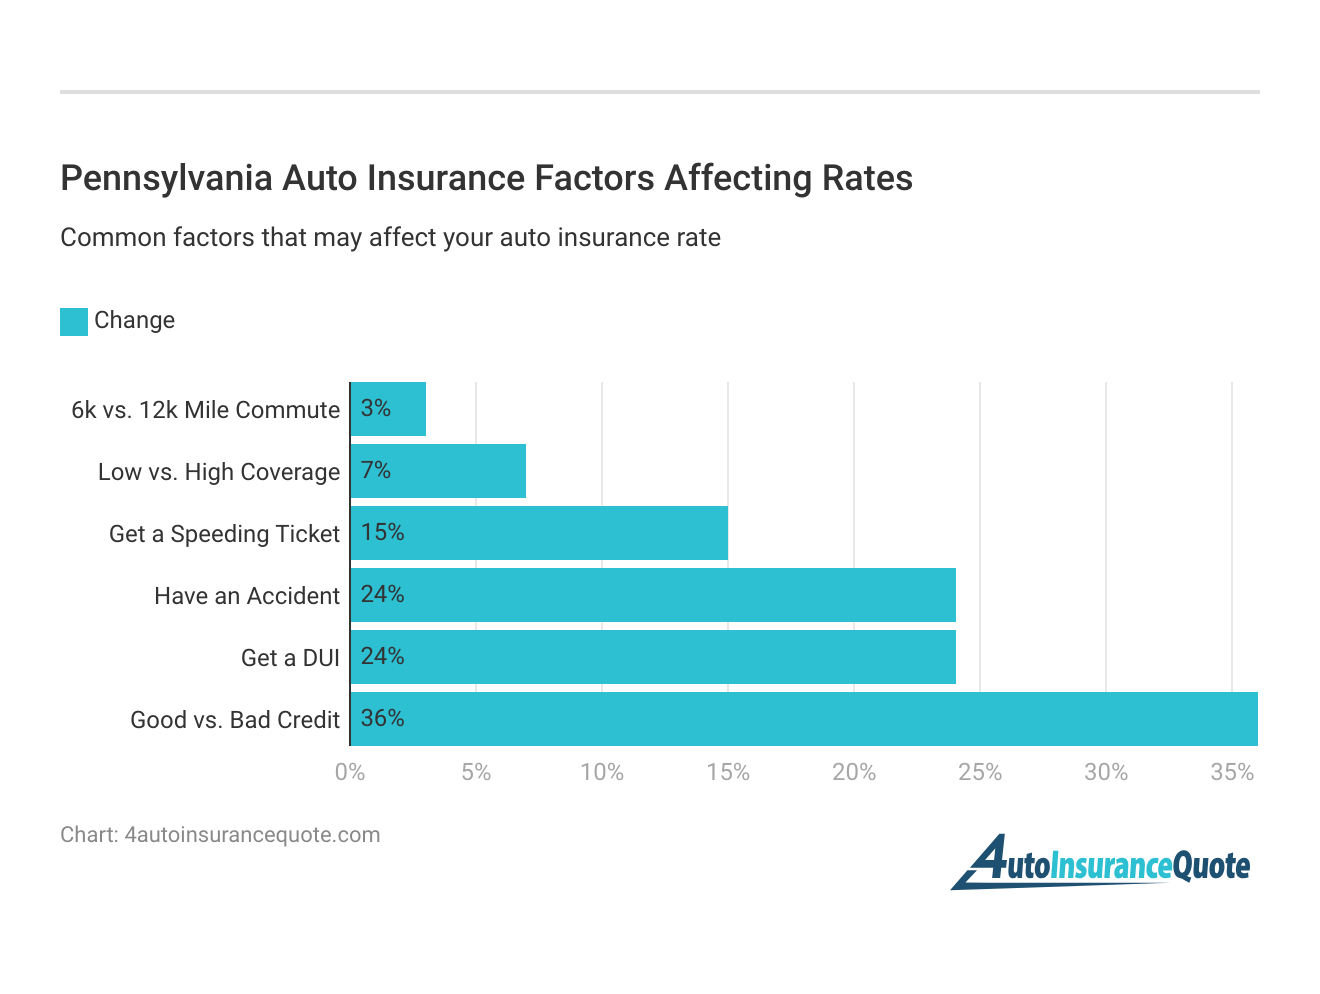 <h3>Pennsylvania Auto Insurance Factors Affecting Rates</h3>